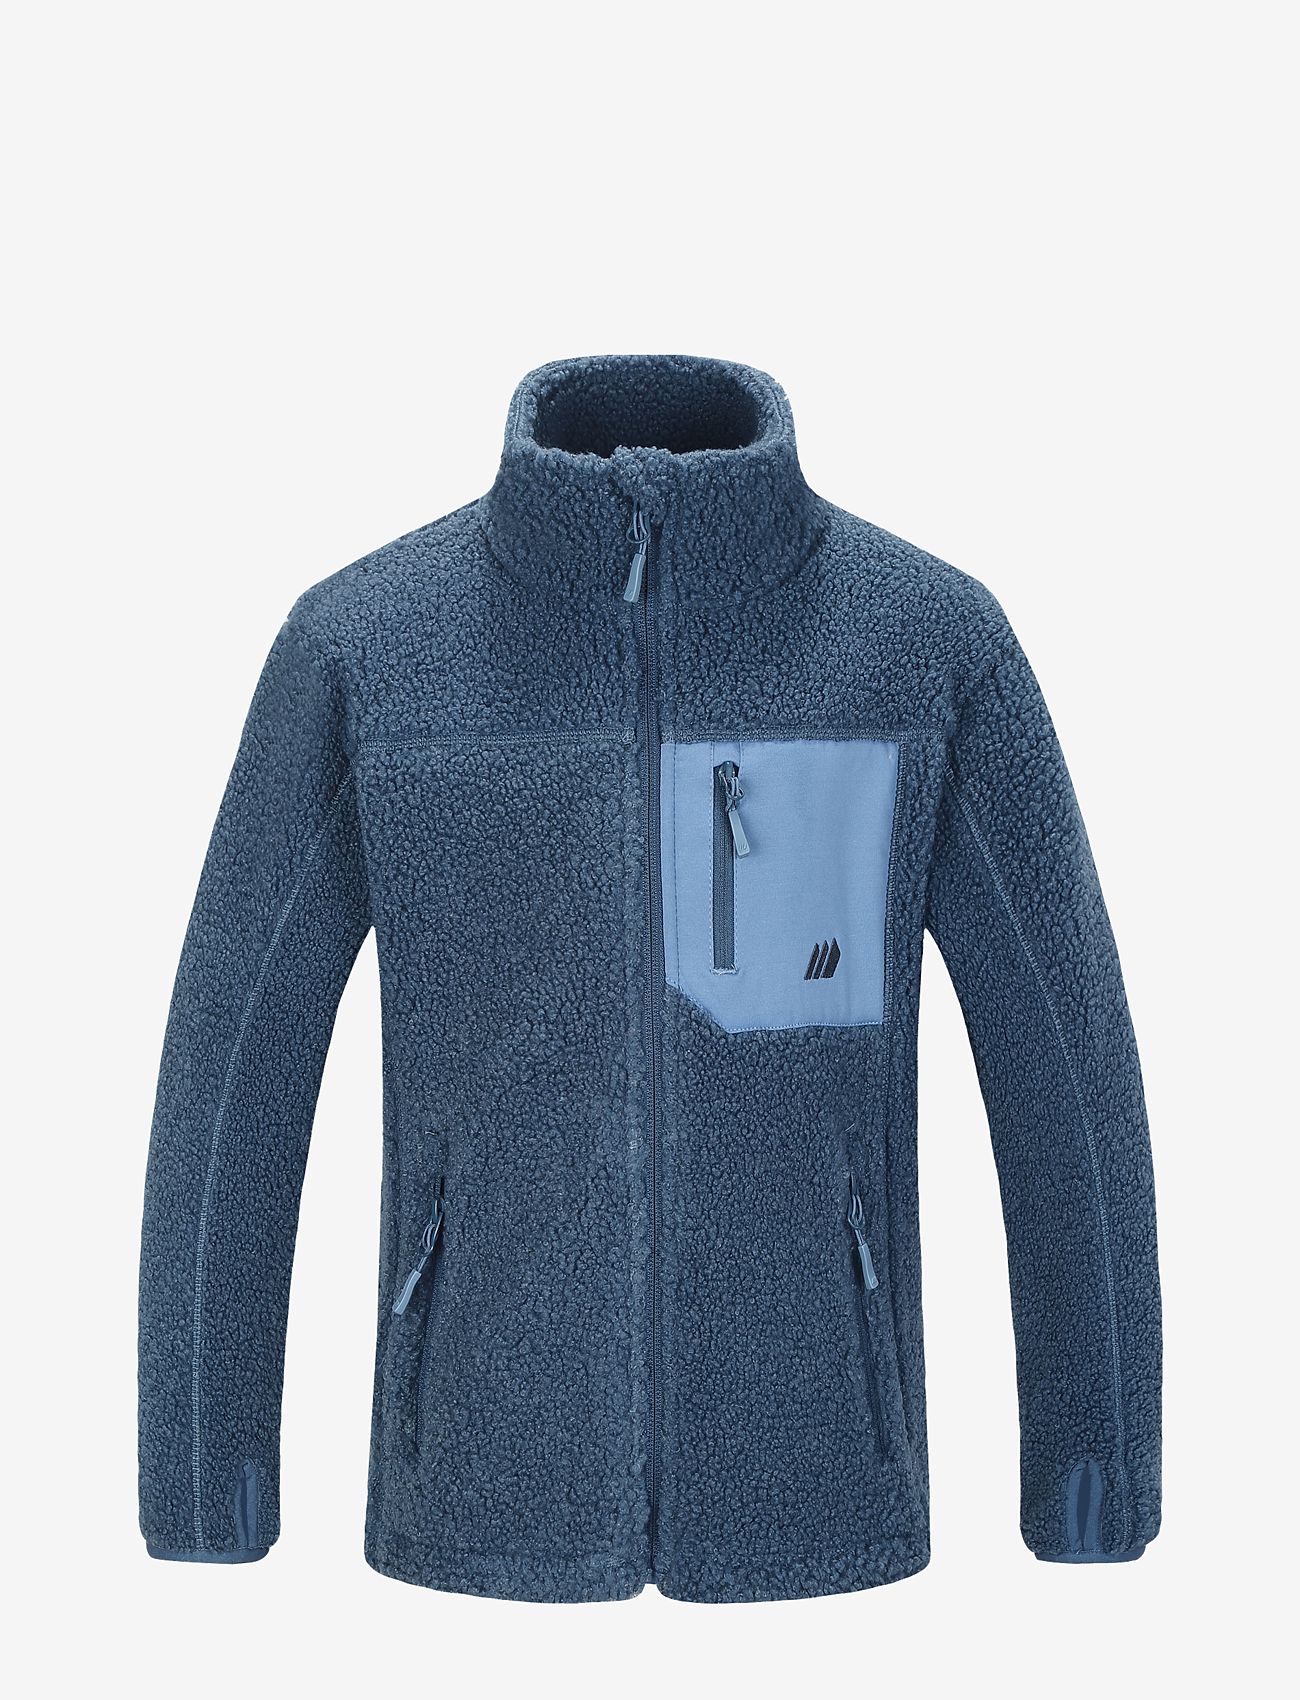 Skogstad - J Leirbekk - fleece jacket - ensign blue - 0